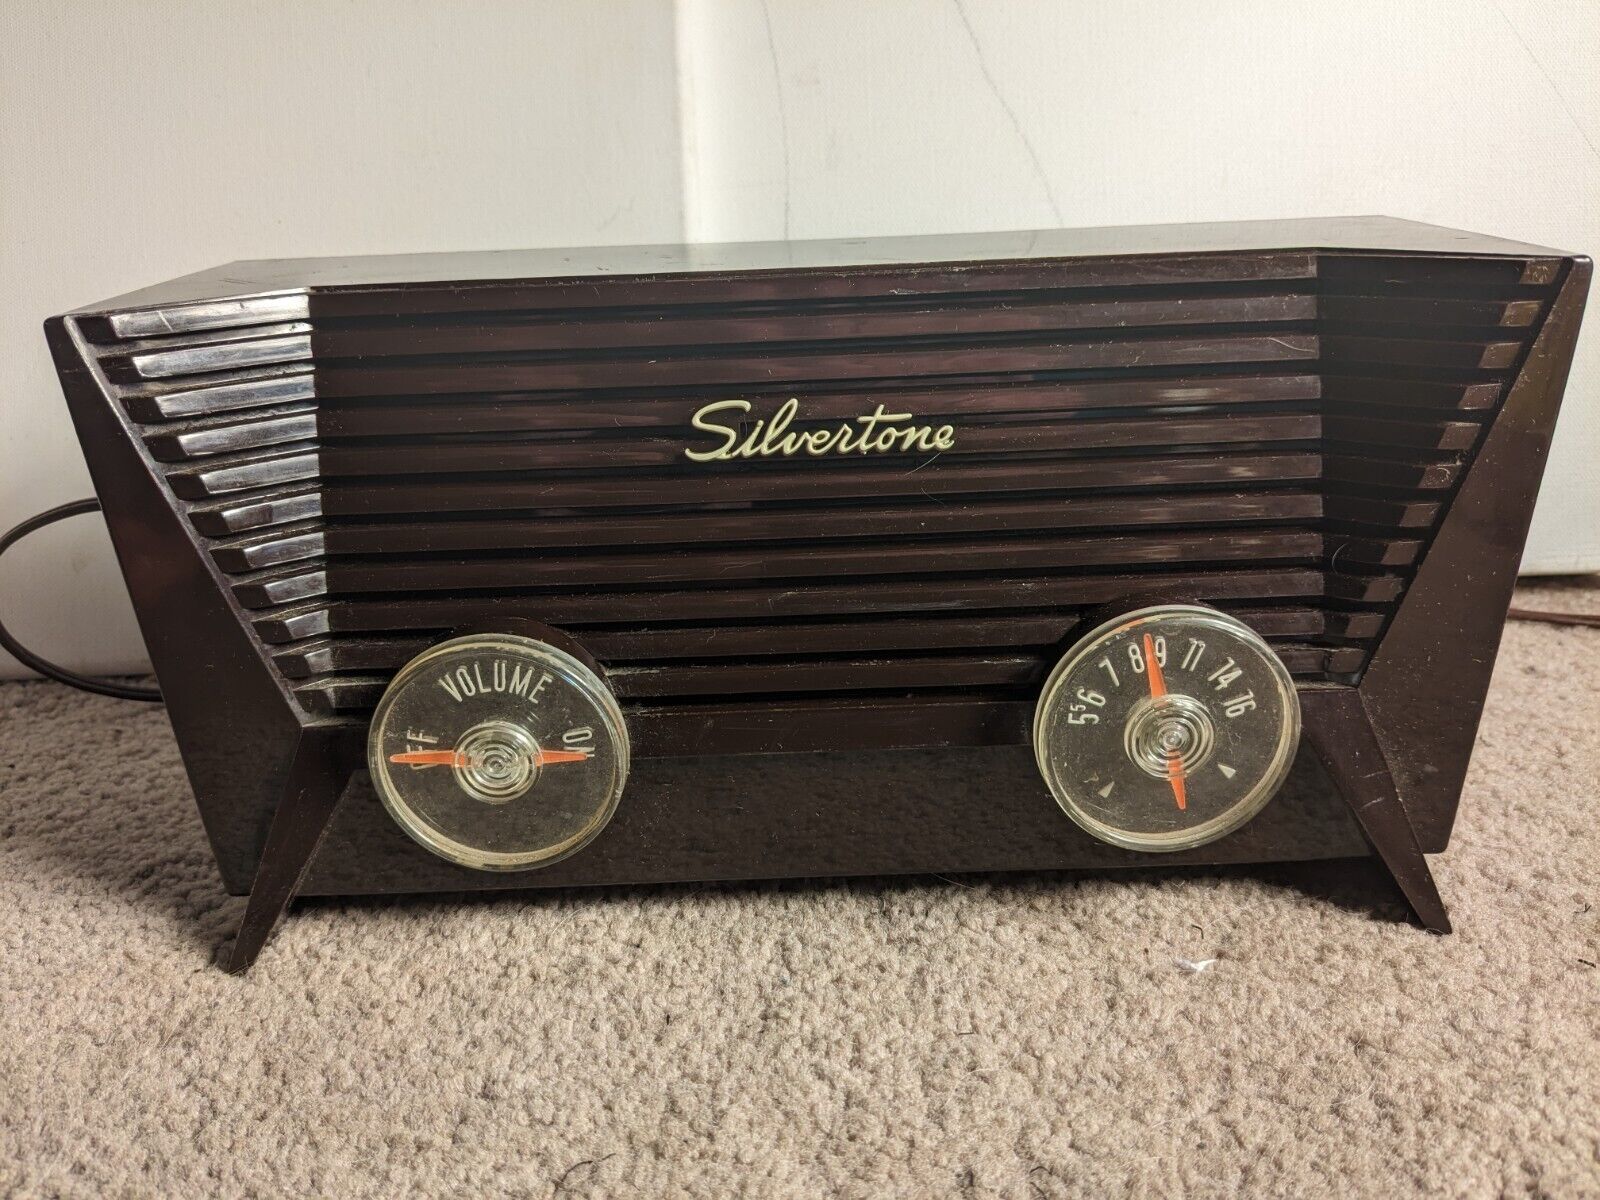 Silvertone Tube Radio Model 9002 AM  1950s Sears Roebuck &Co. Brown plastic